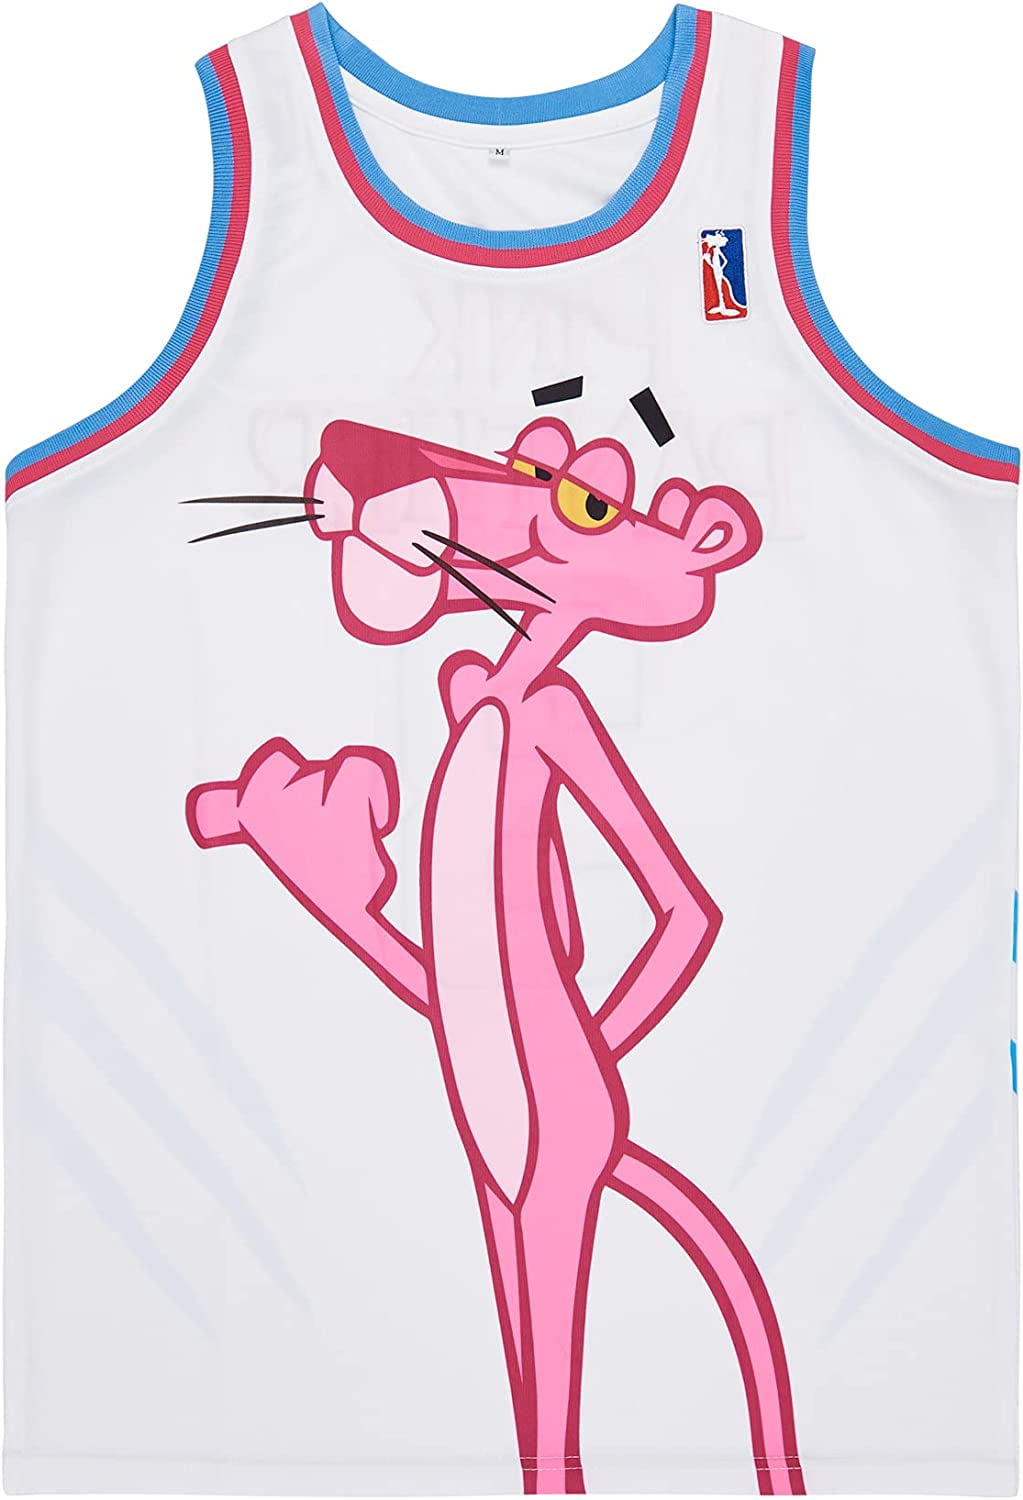 Mens Panther #3 Basketball Jersey Stitched Pink White Black Pinkblue 